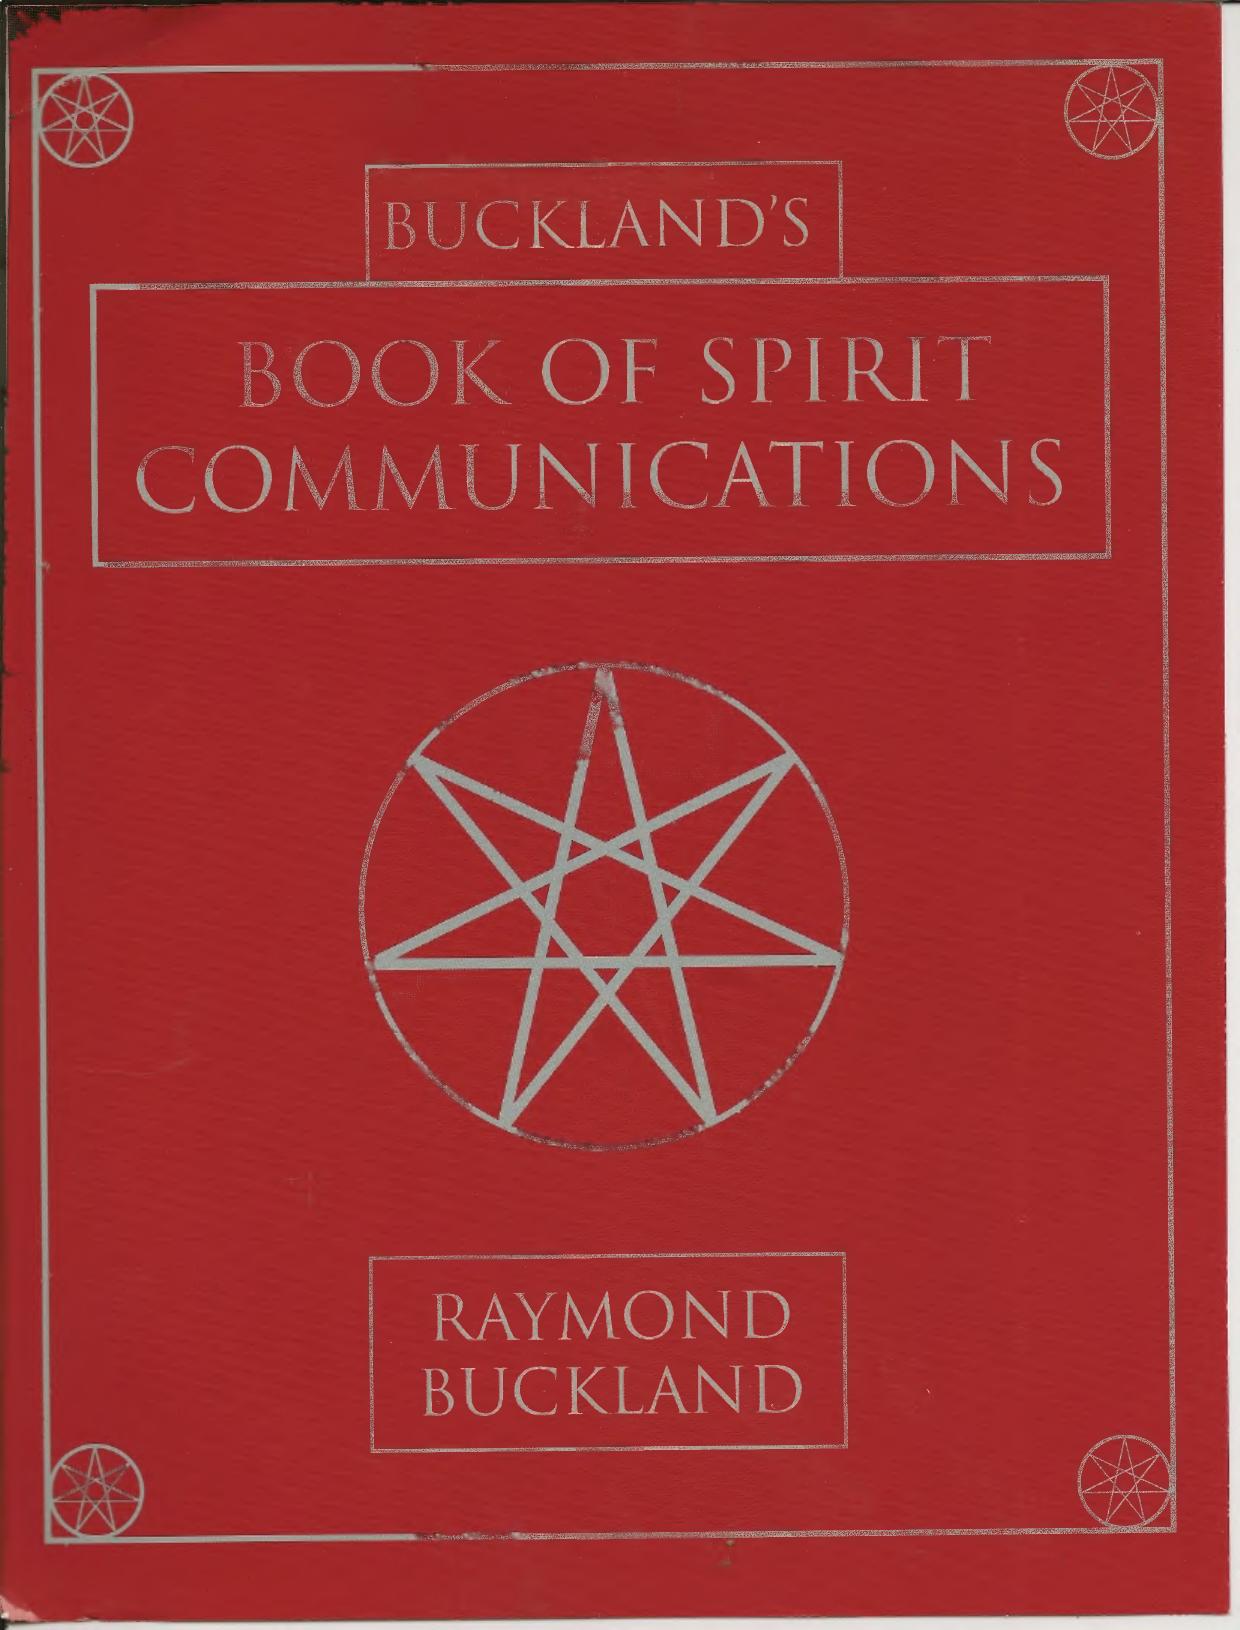 Book for Spirit Communications